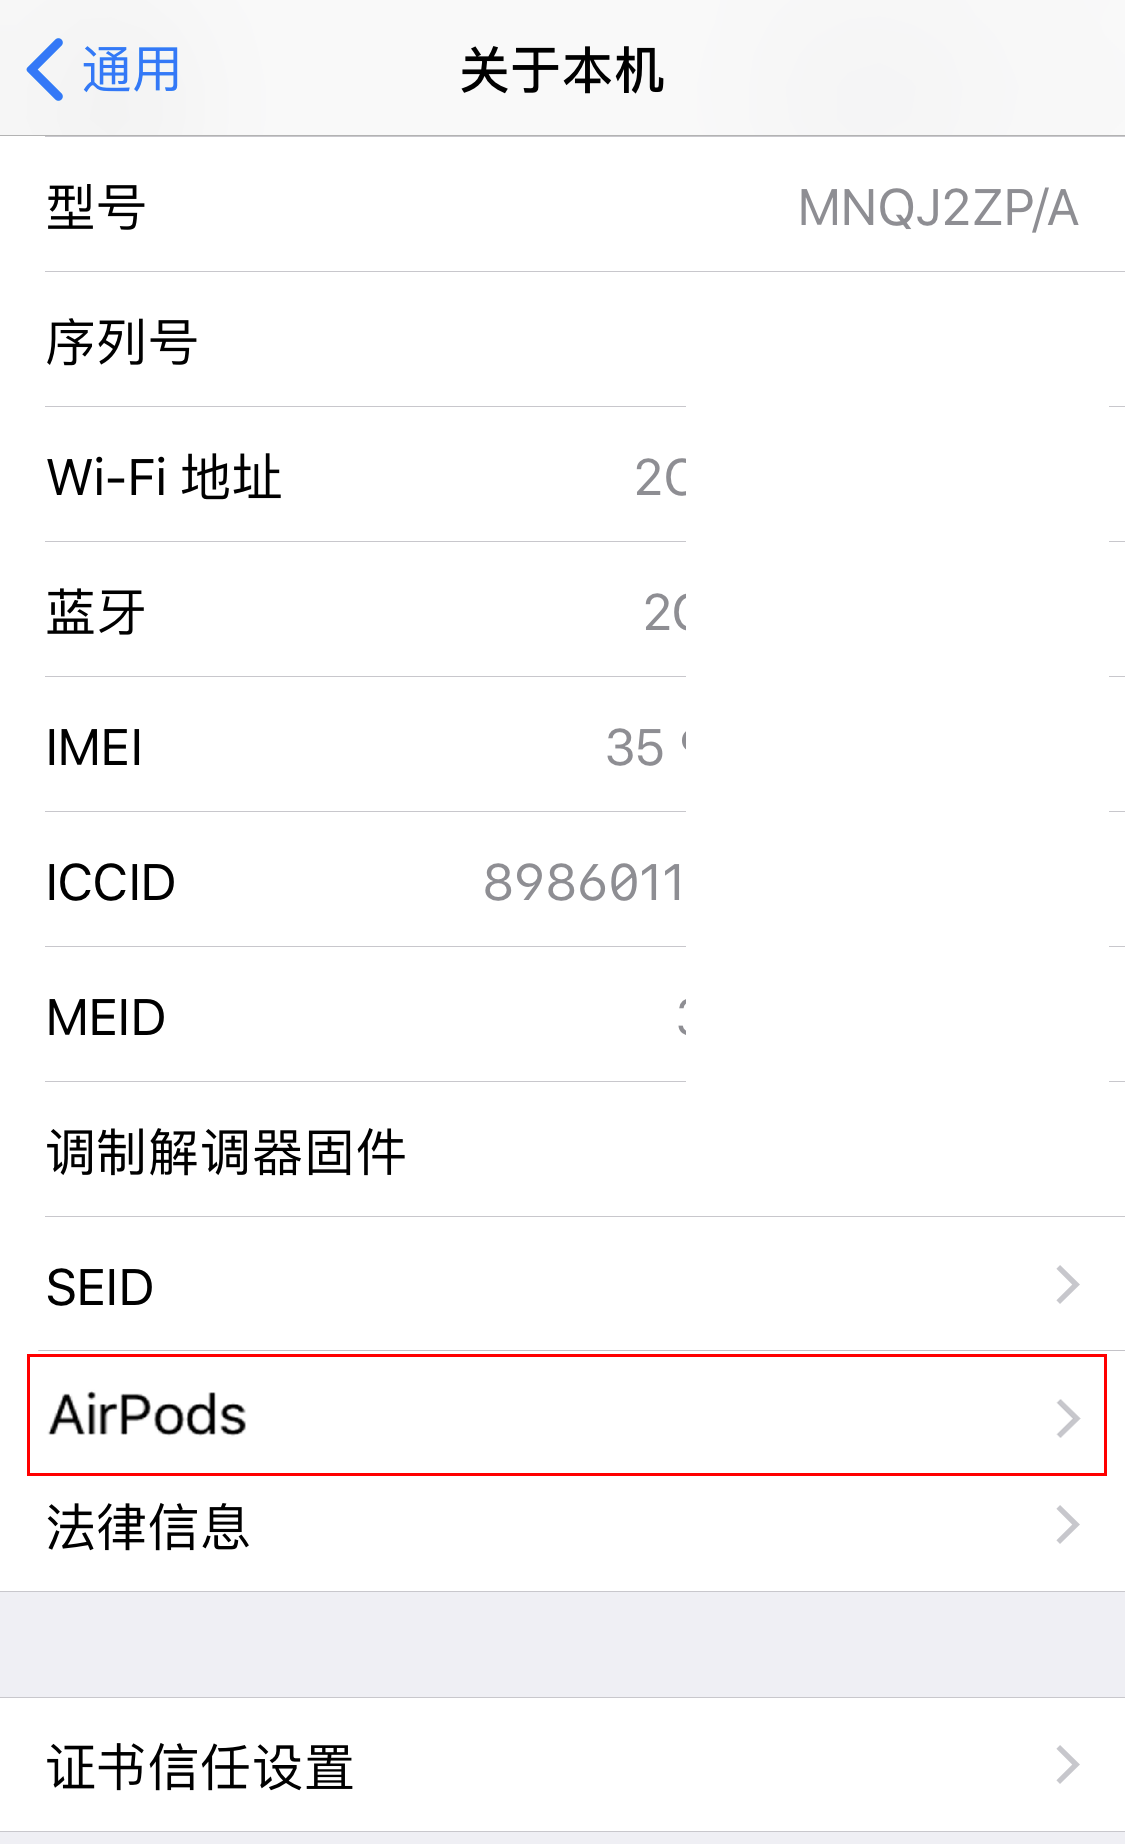 AirPods 固件升级至 6.3.2，附升级步骤